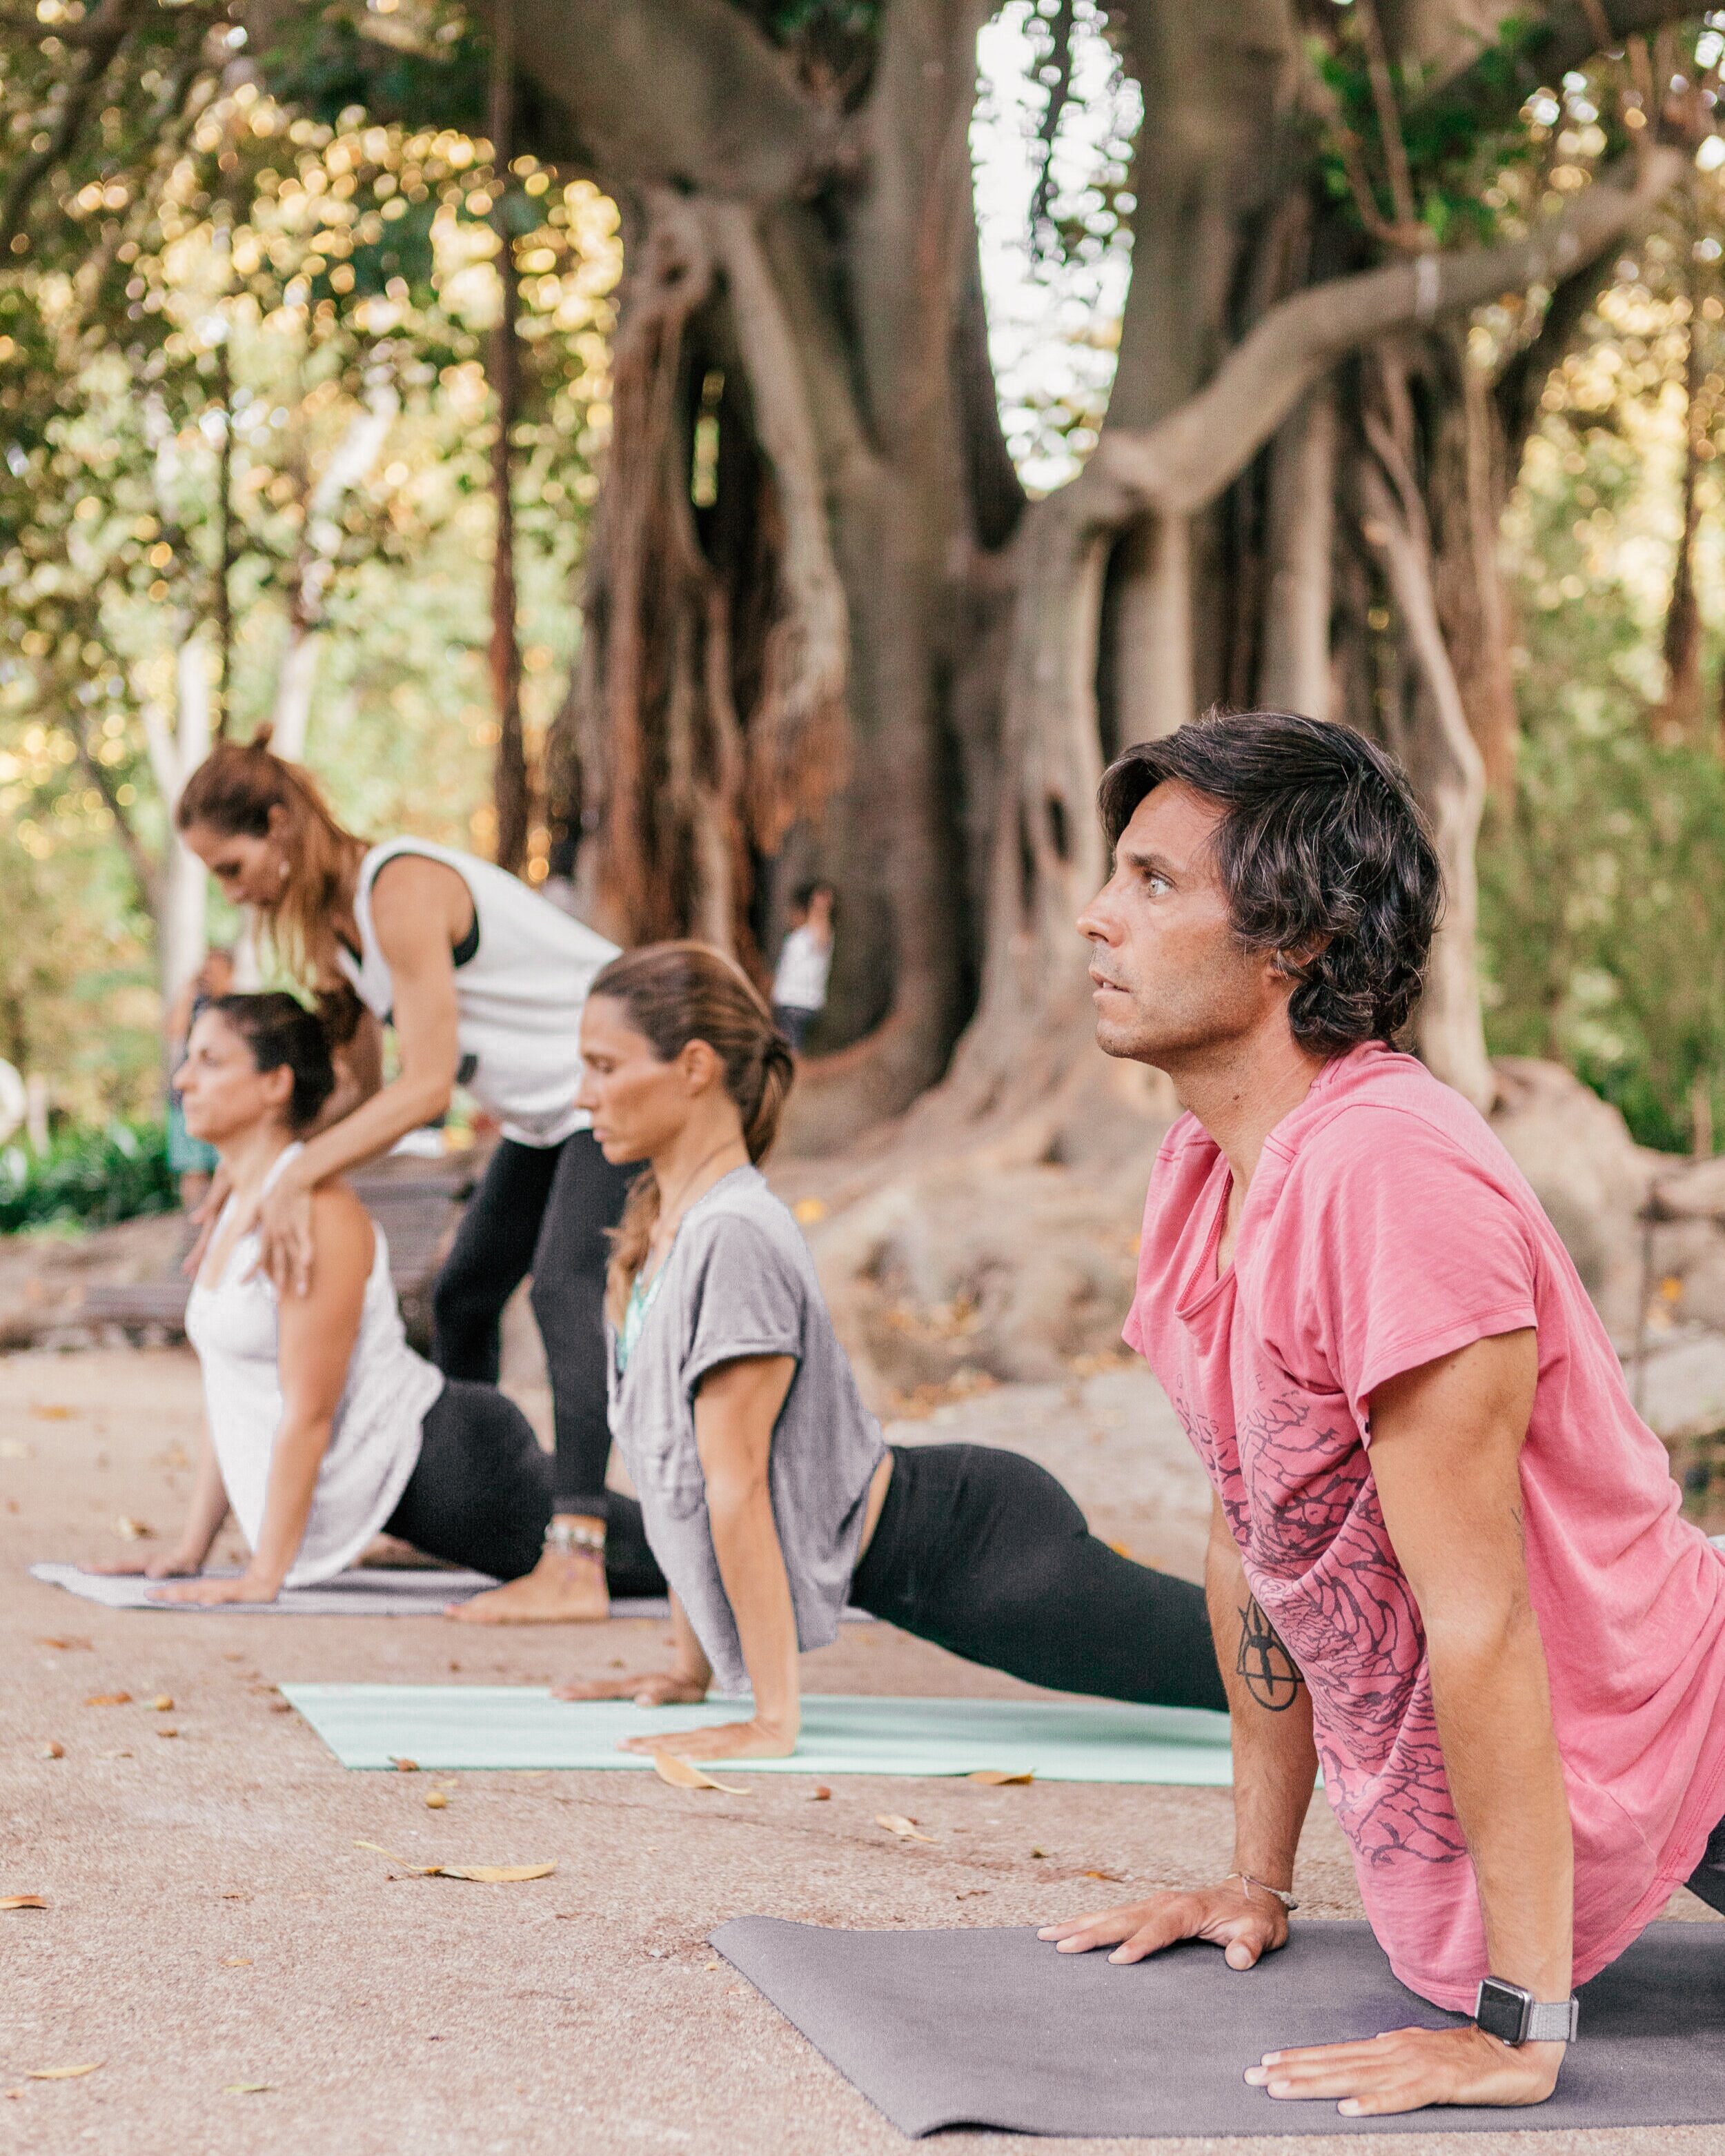 3 Ways to Make New Yoga Friends